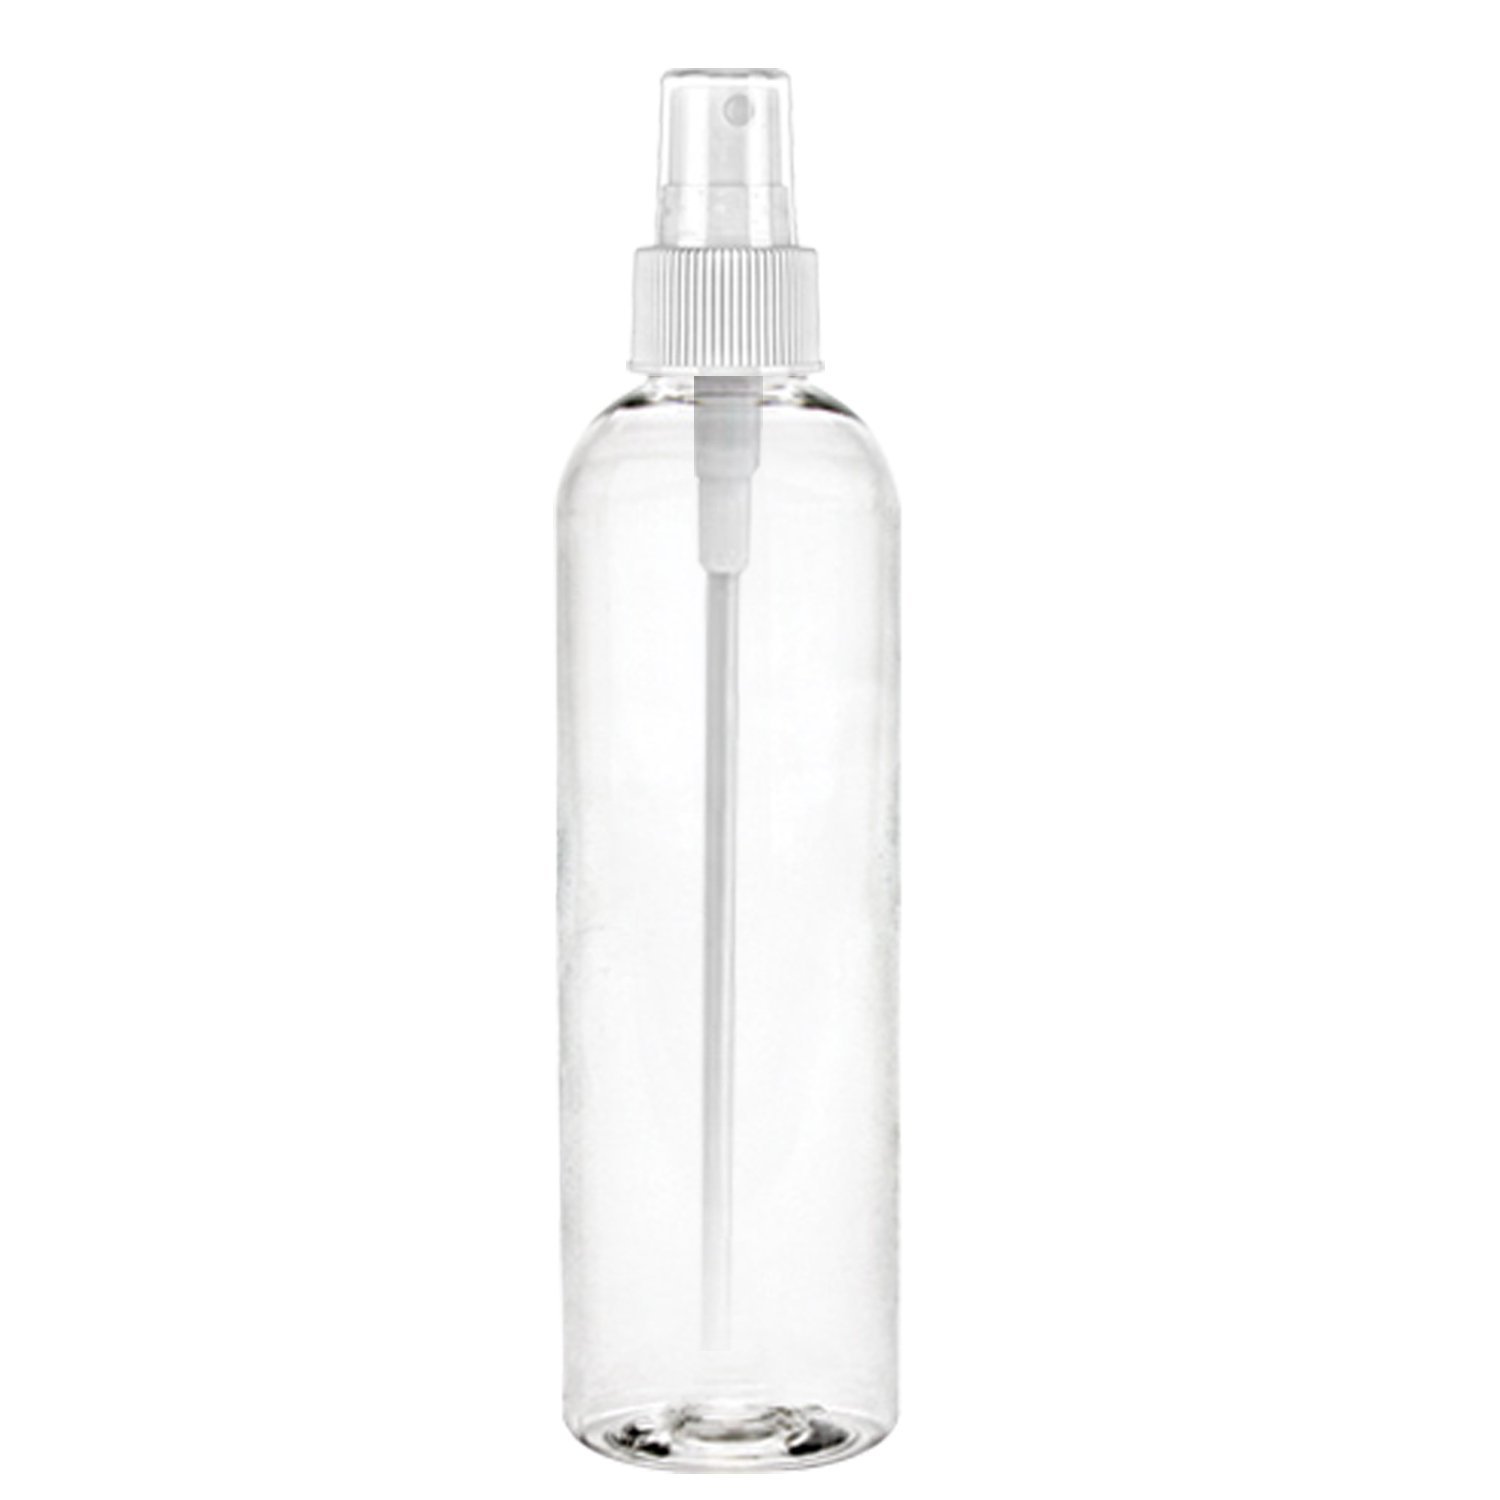 4 Oz Empty Fine Mist Sprayer Bottles BPA Free PET Travel Containers ...